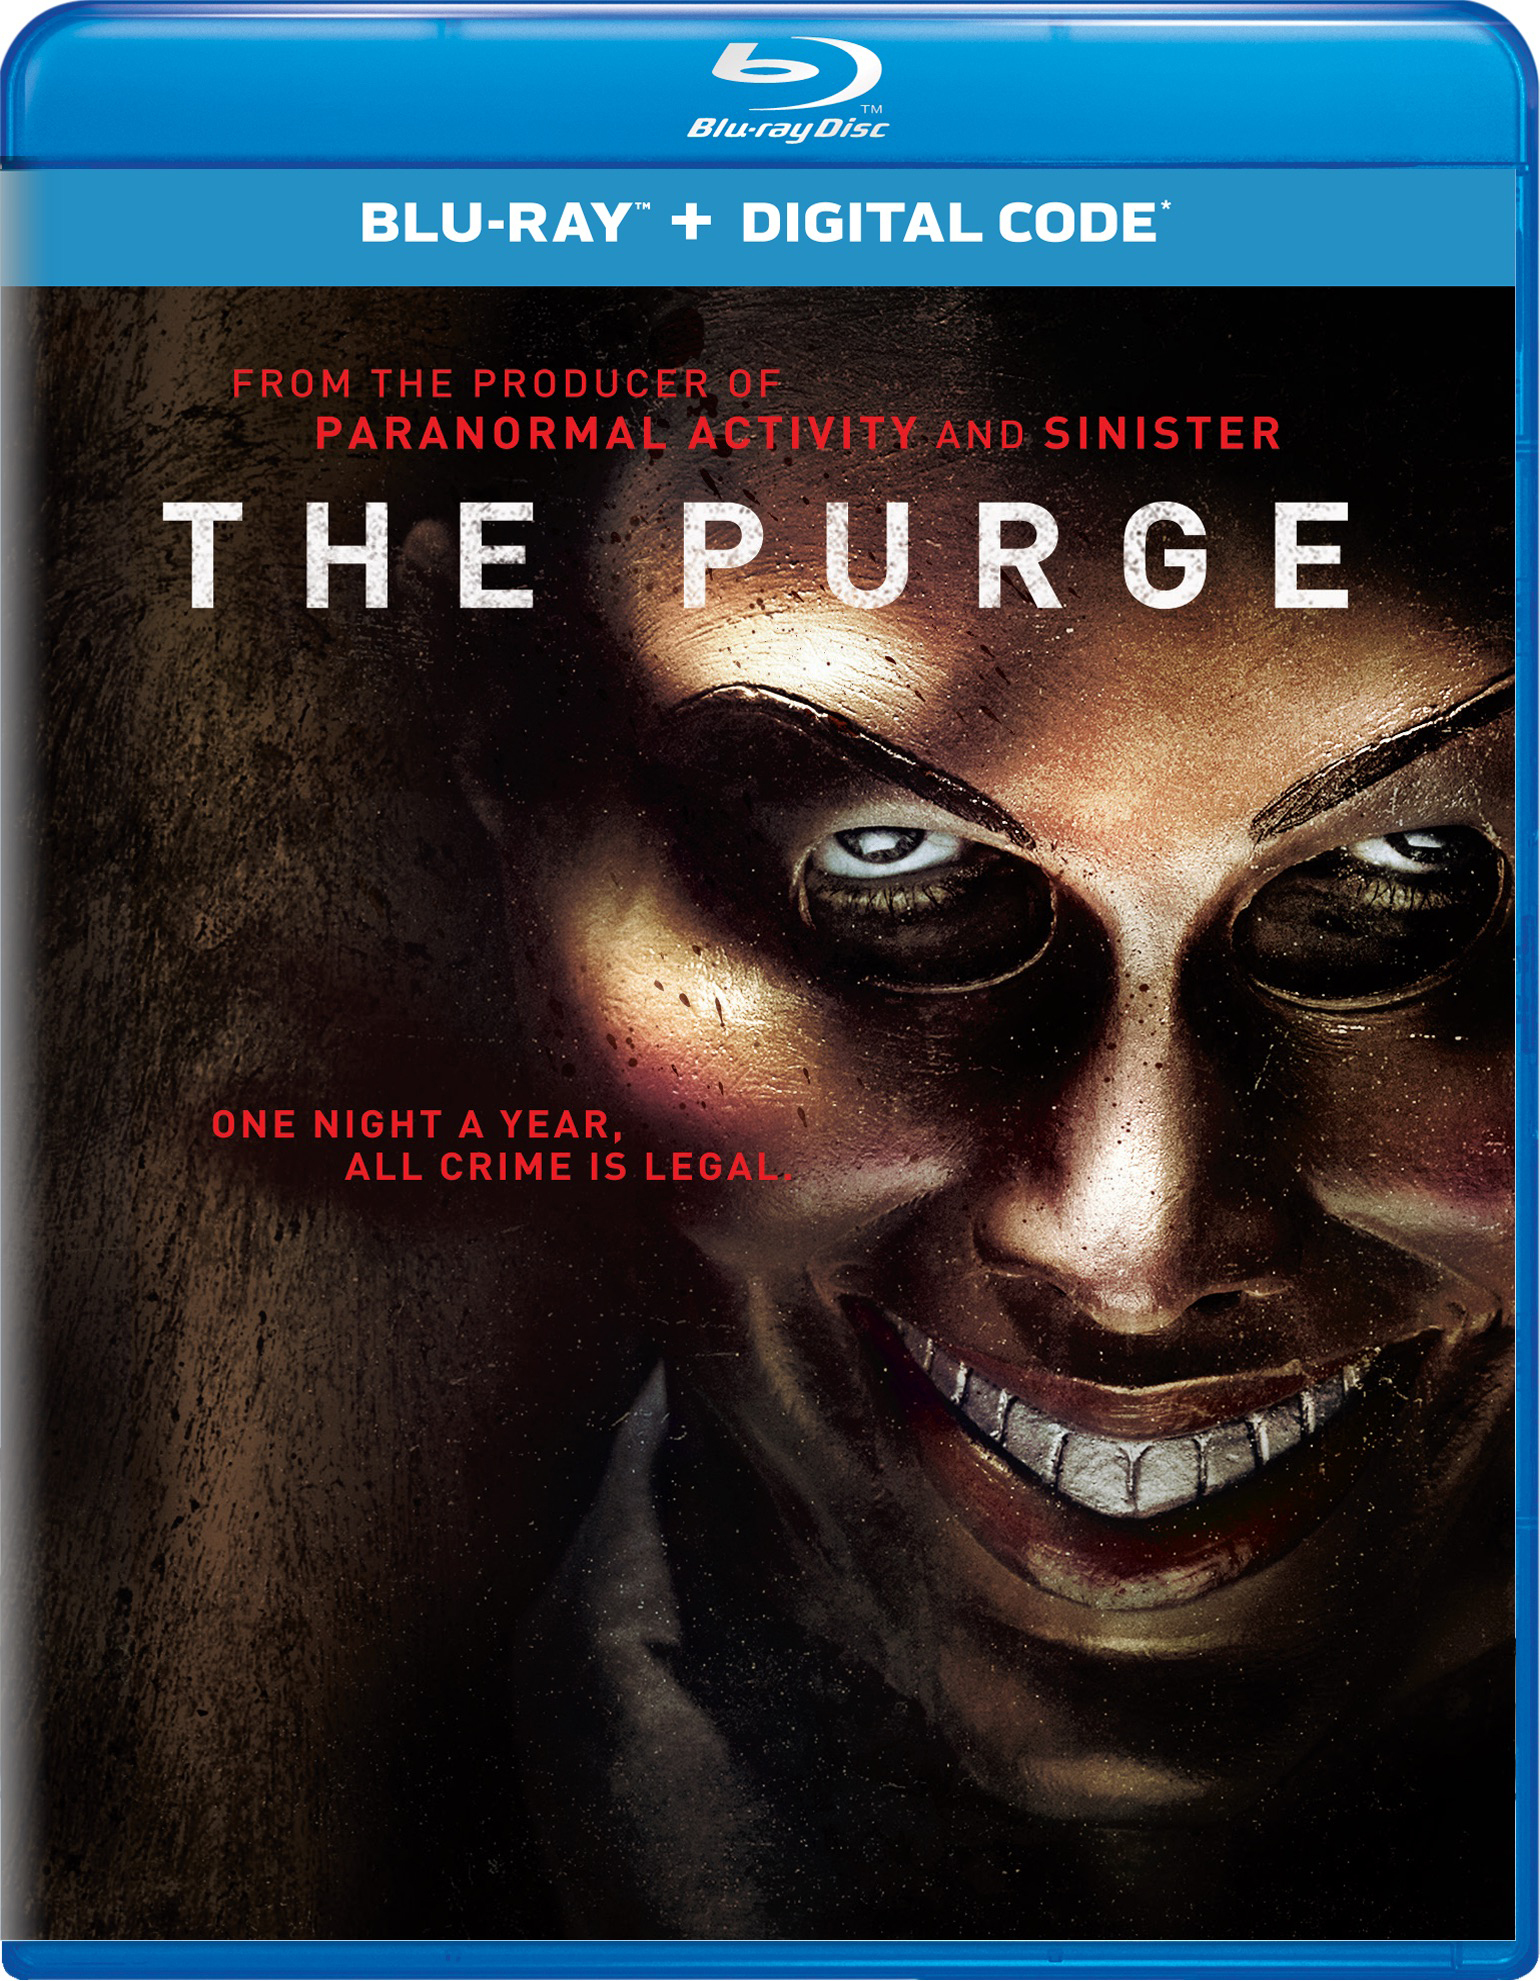 The Purge (Blu-ray + Digital HD) - Blu-ray [ 2013 ]  - Horror Movies On Blu-ray - Movies On GRUV